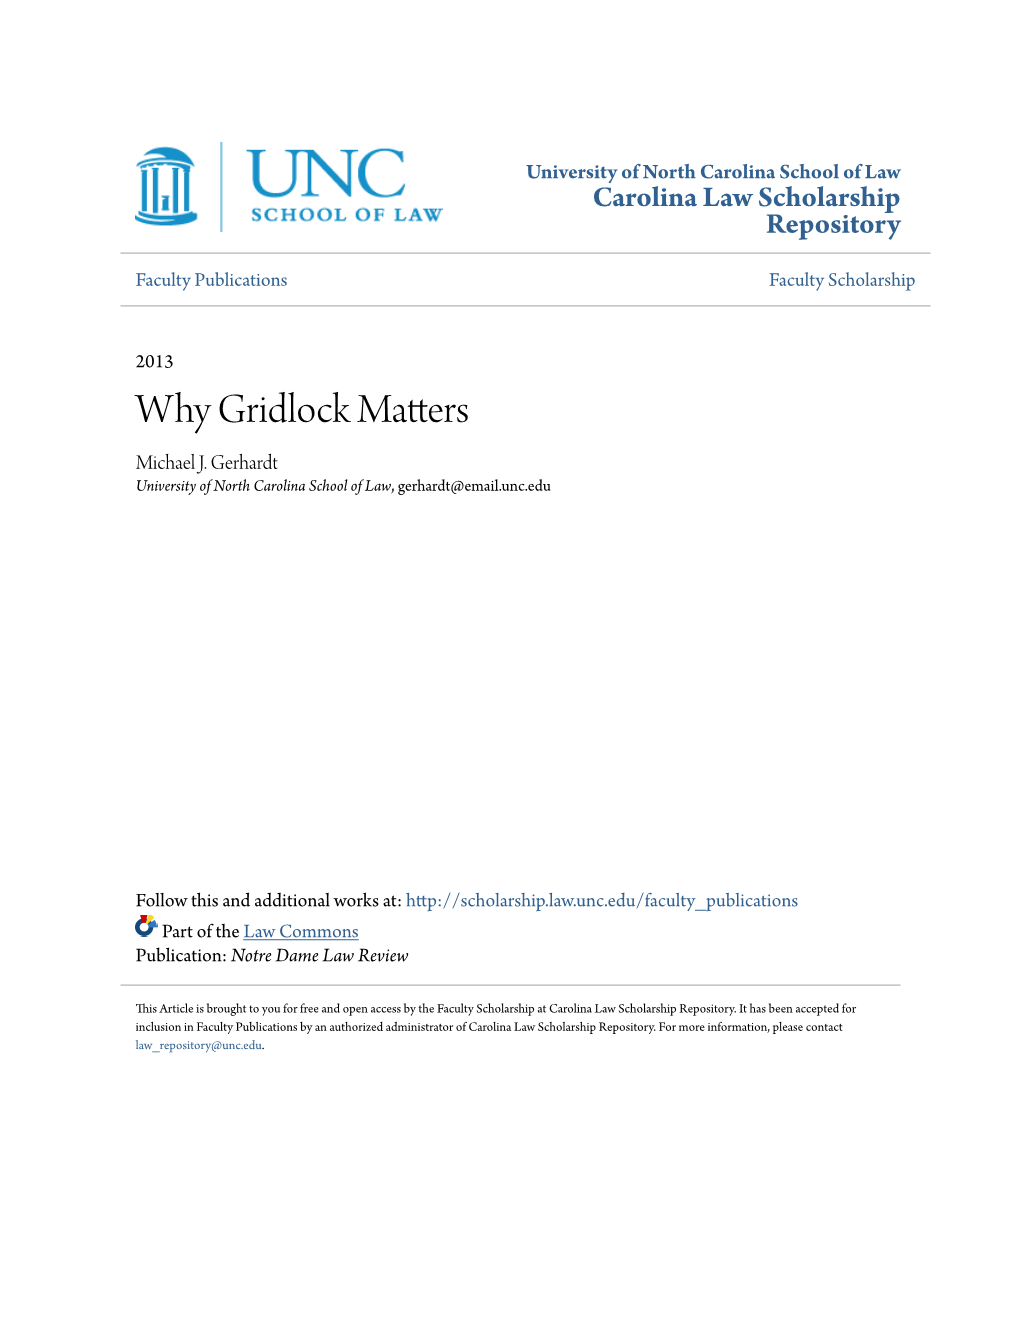 Why Gridlock Matters Michael J